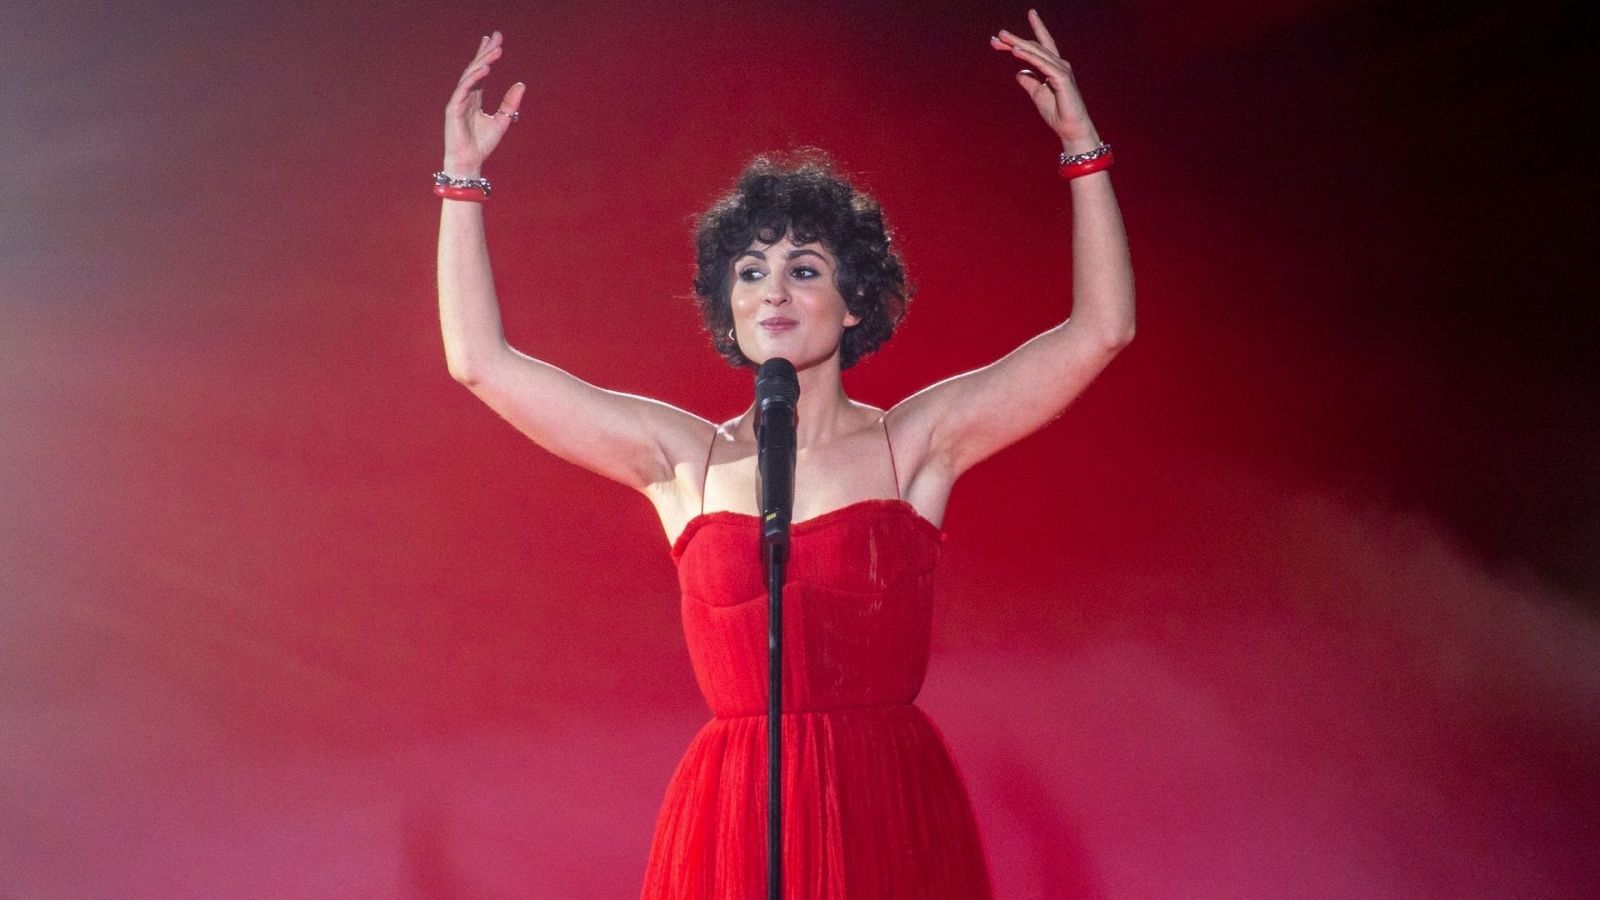 Eurovisión Junior 2021: Barbara Pravi interpreta "Voilà"